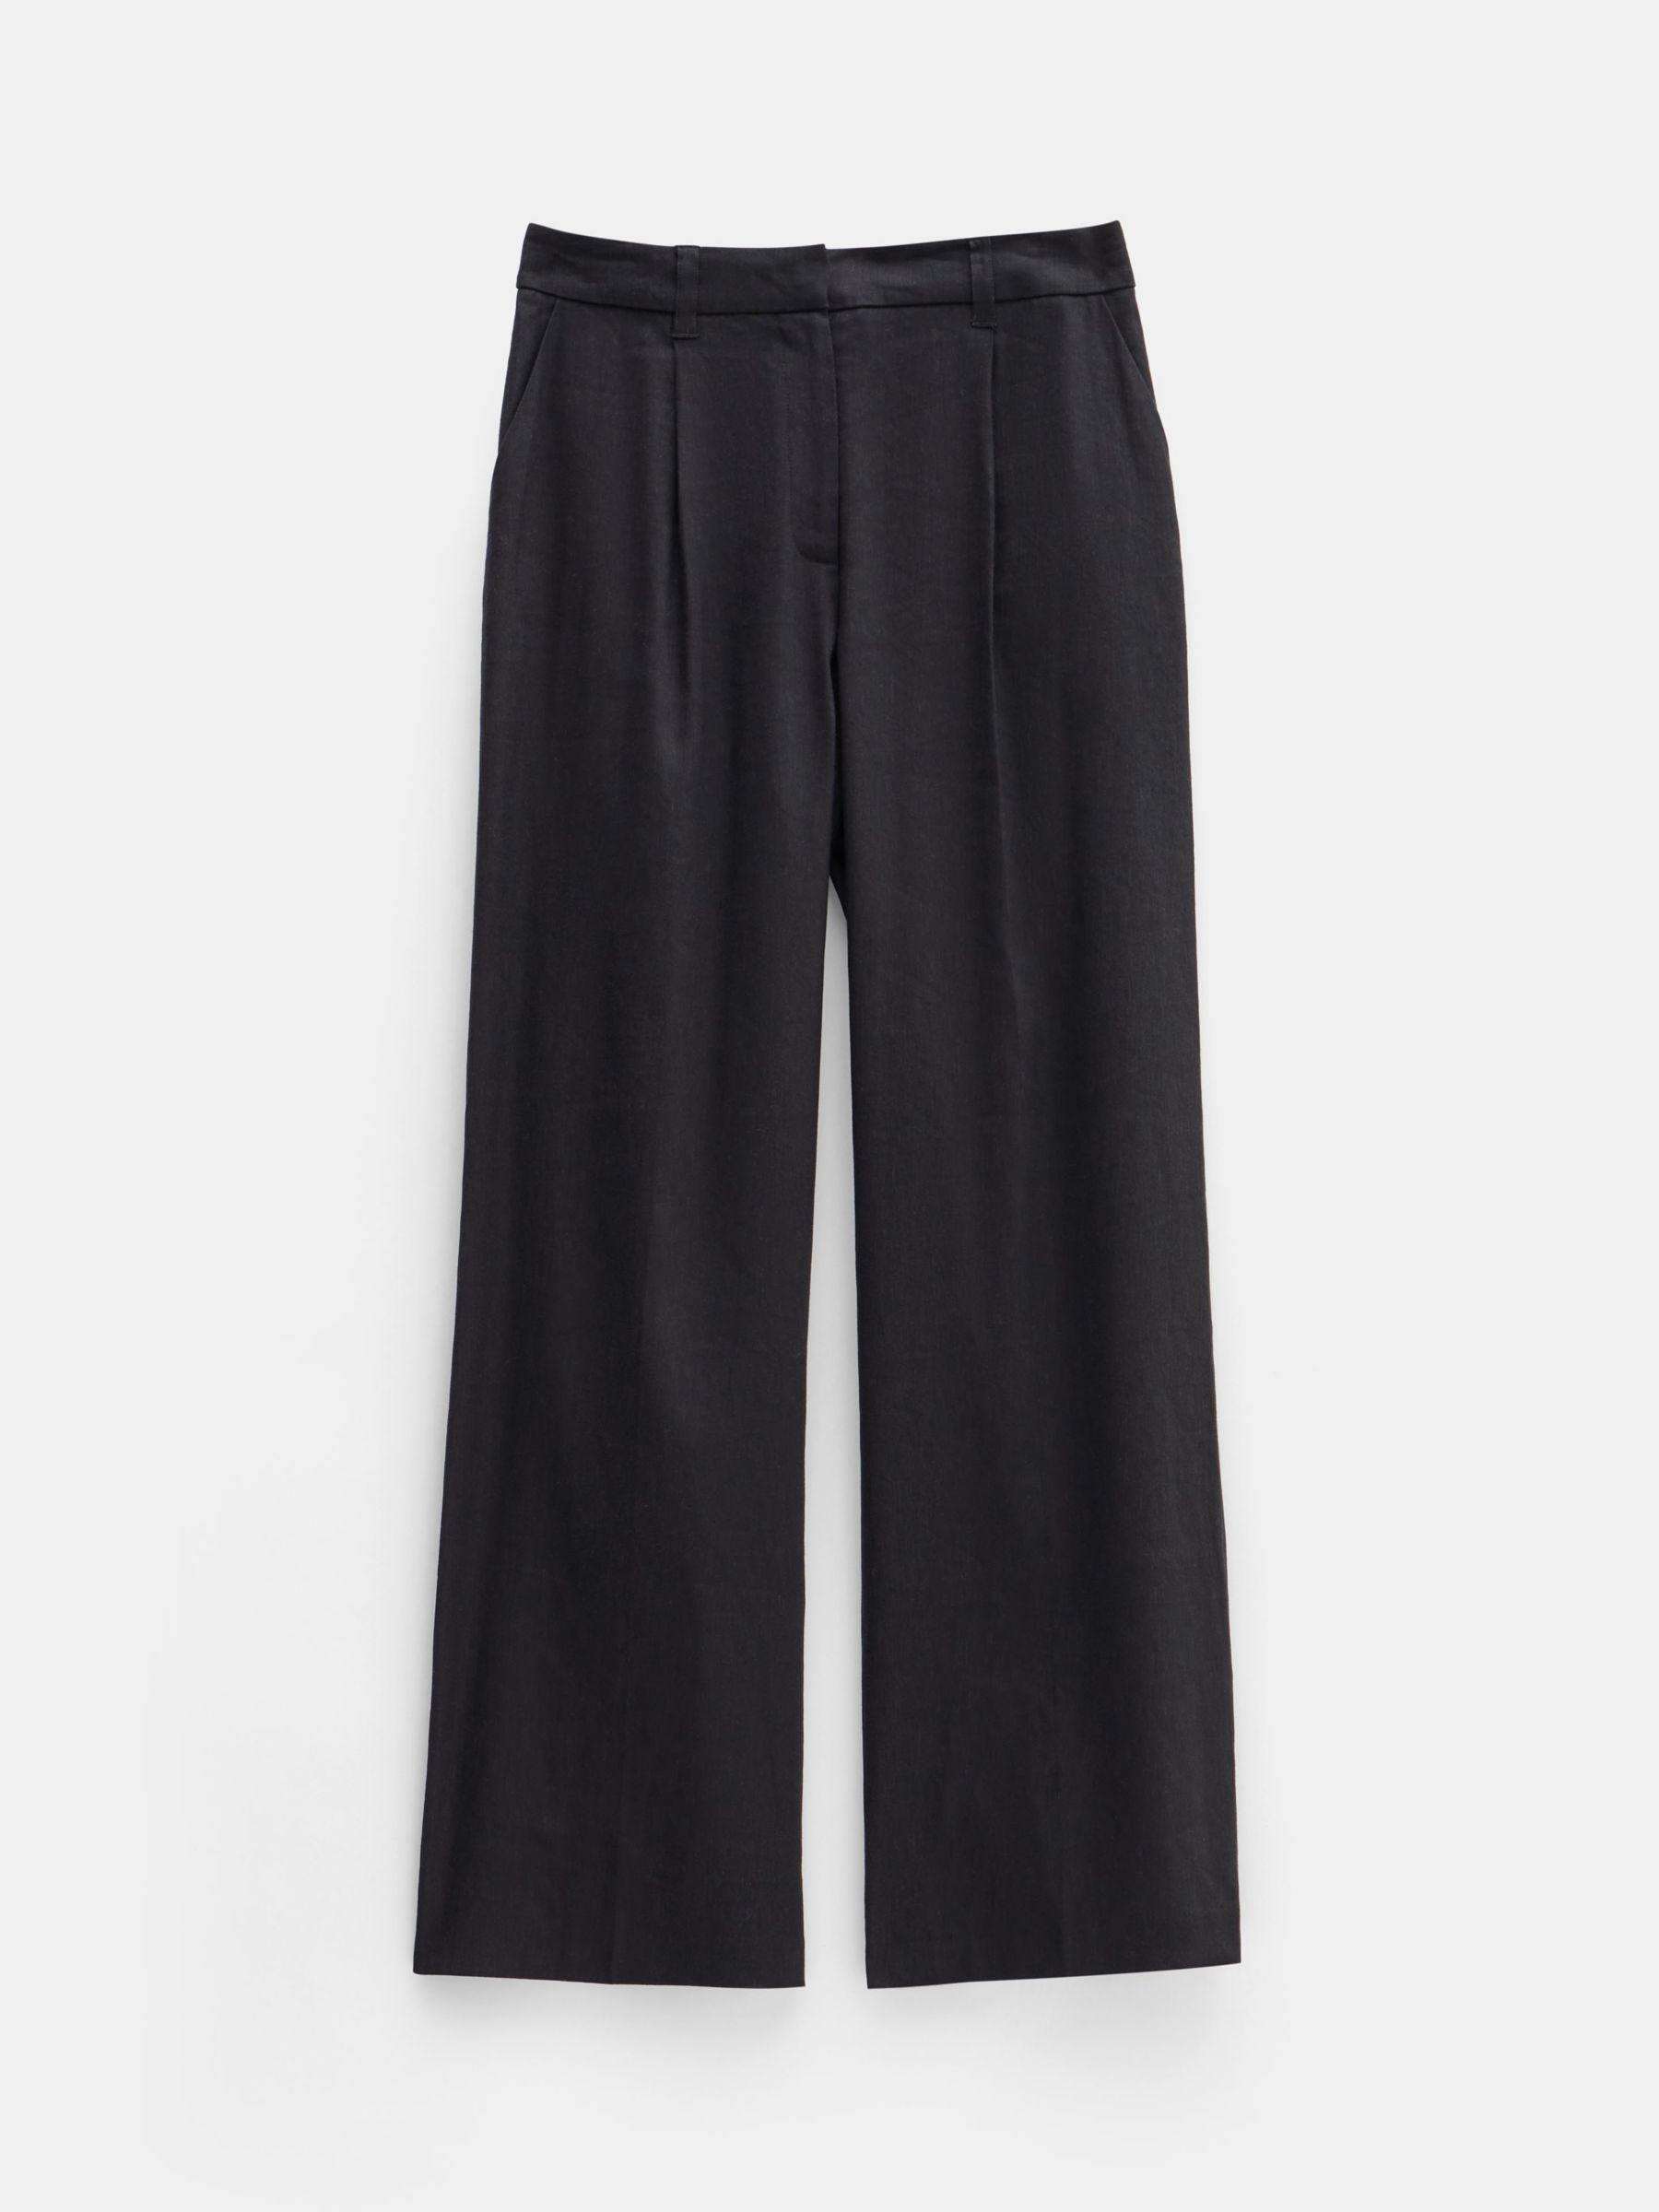 HUSH Lana Linen Blend Trousers, Black, 10